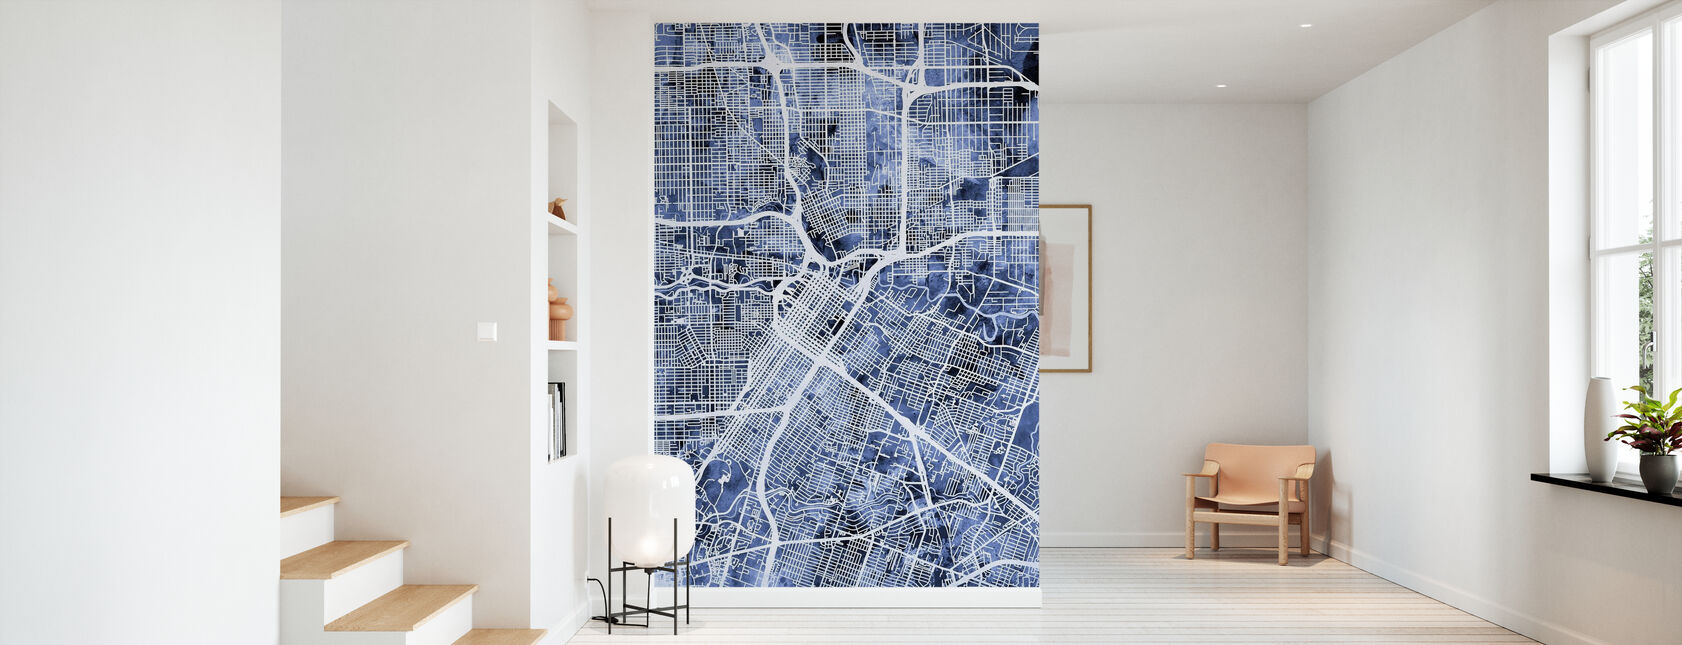 Houston Texas City Street Map - Wallpaper - Hallway